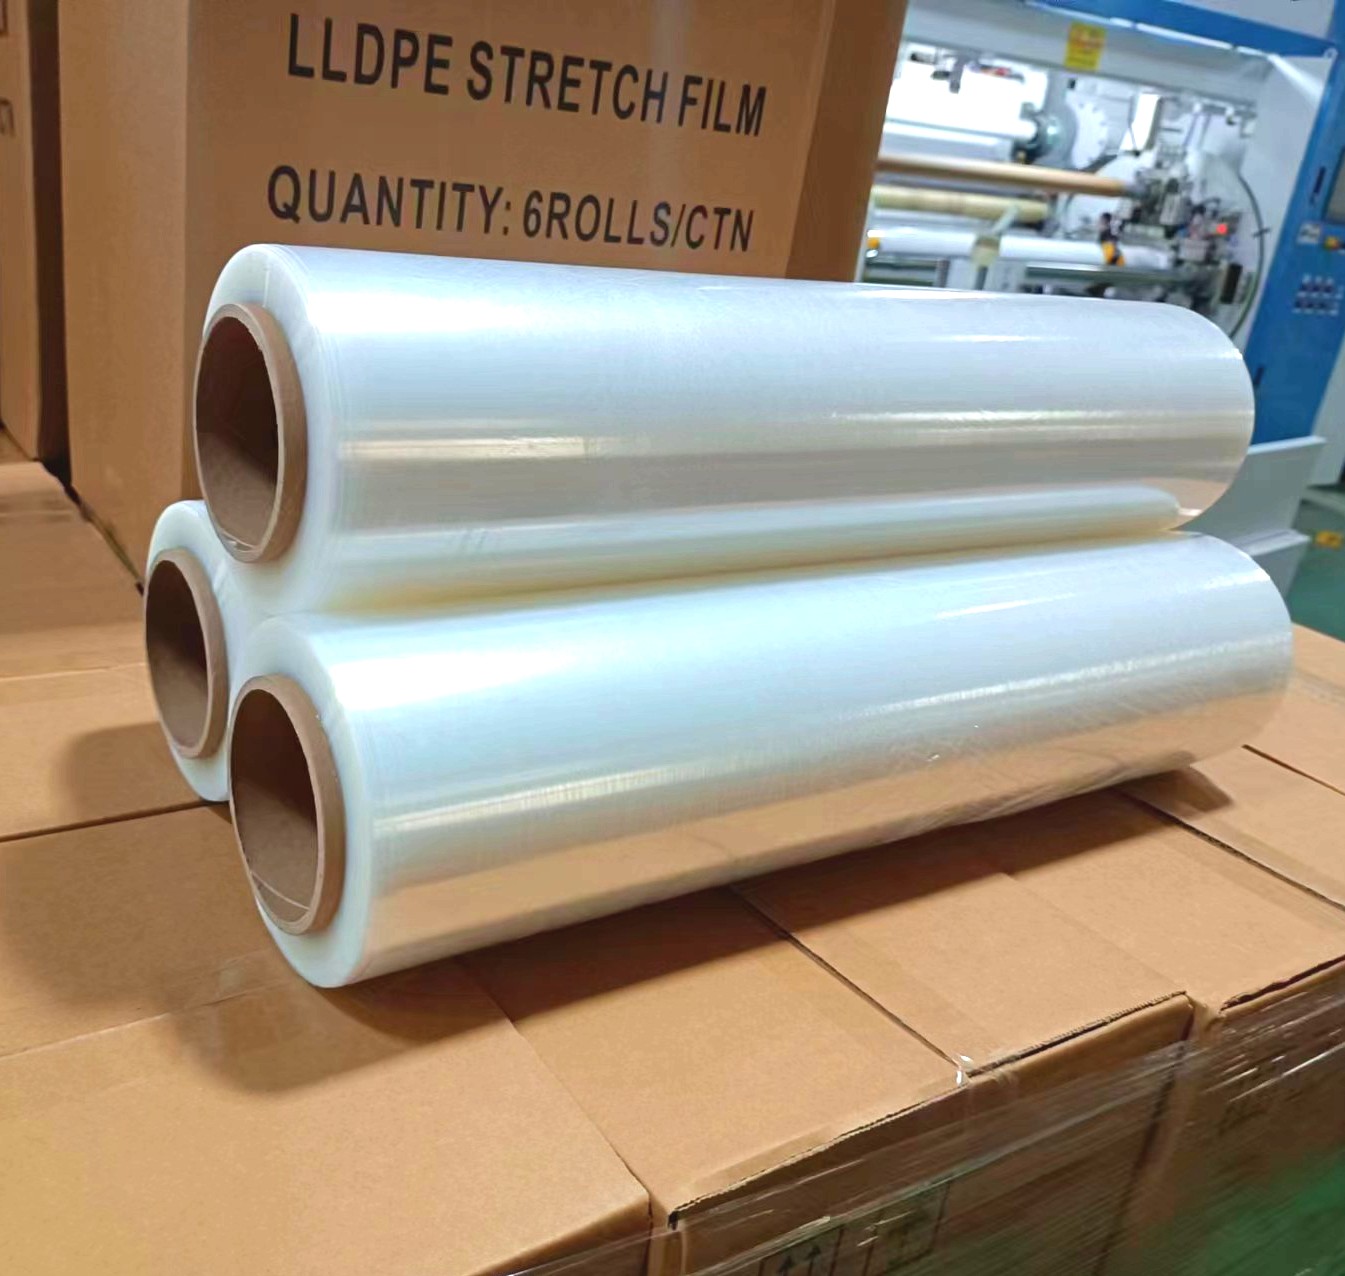 LLDPE Transparent And Black 50cmx20micornx2kgs Pallet Wrap/ Stretch Film/Strech Plastic Film